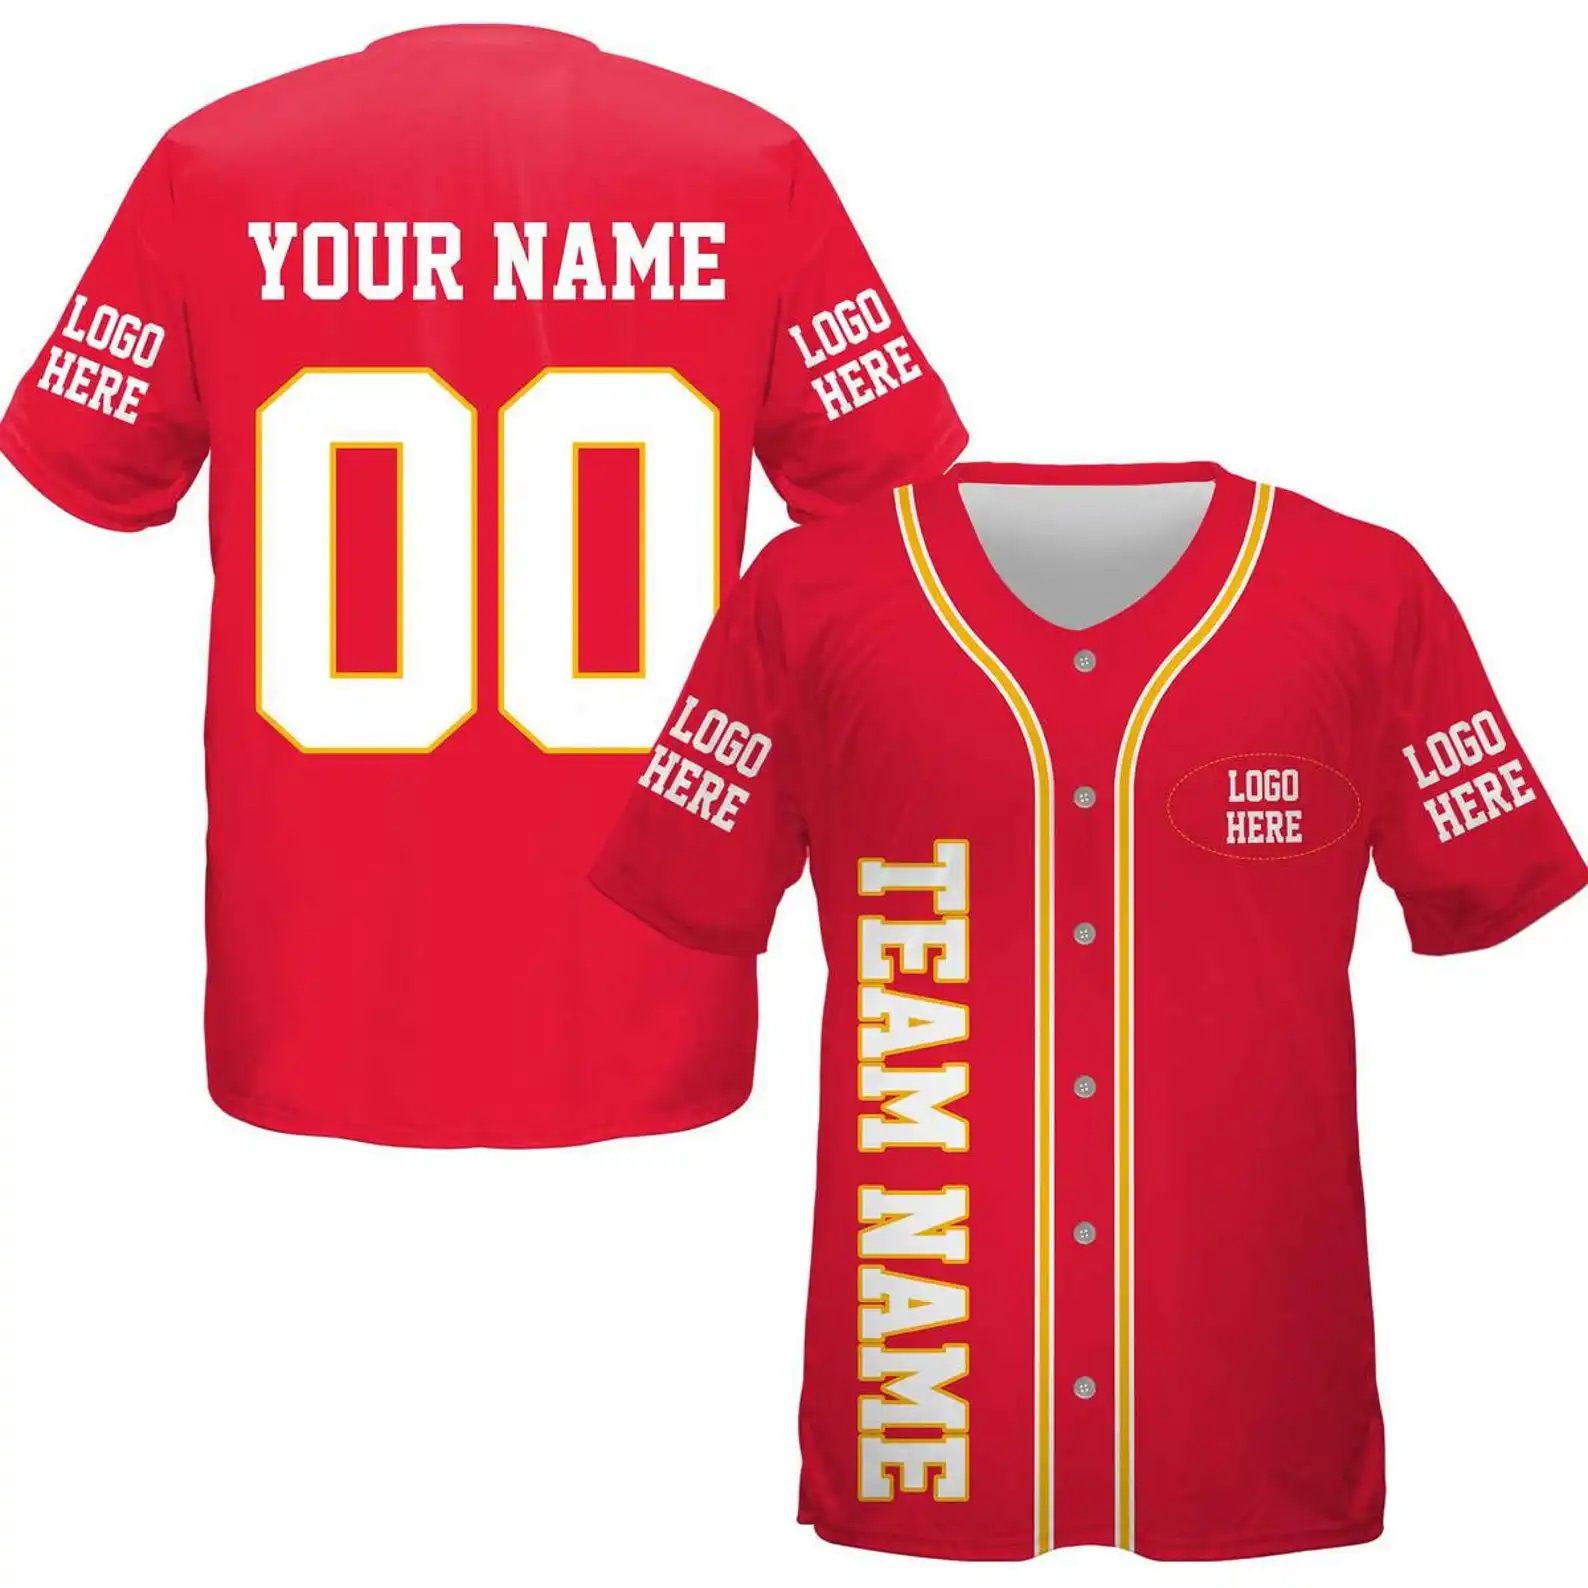 Personalized Kansas City Football Team Idea Gift For Fans Baseball Jersey